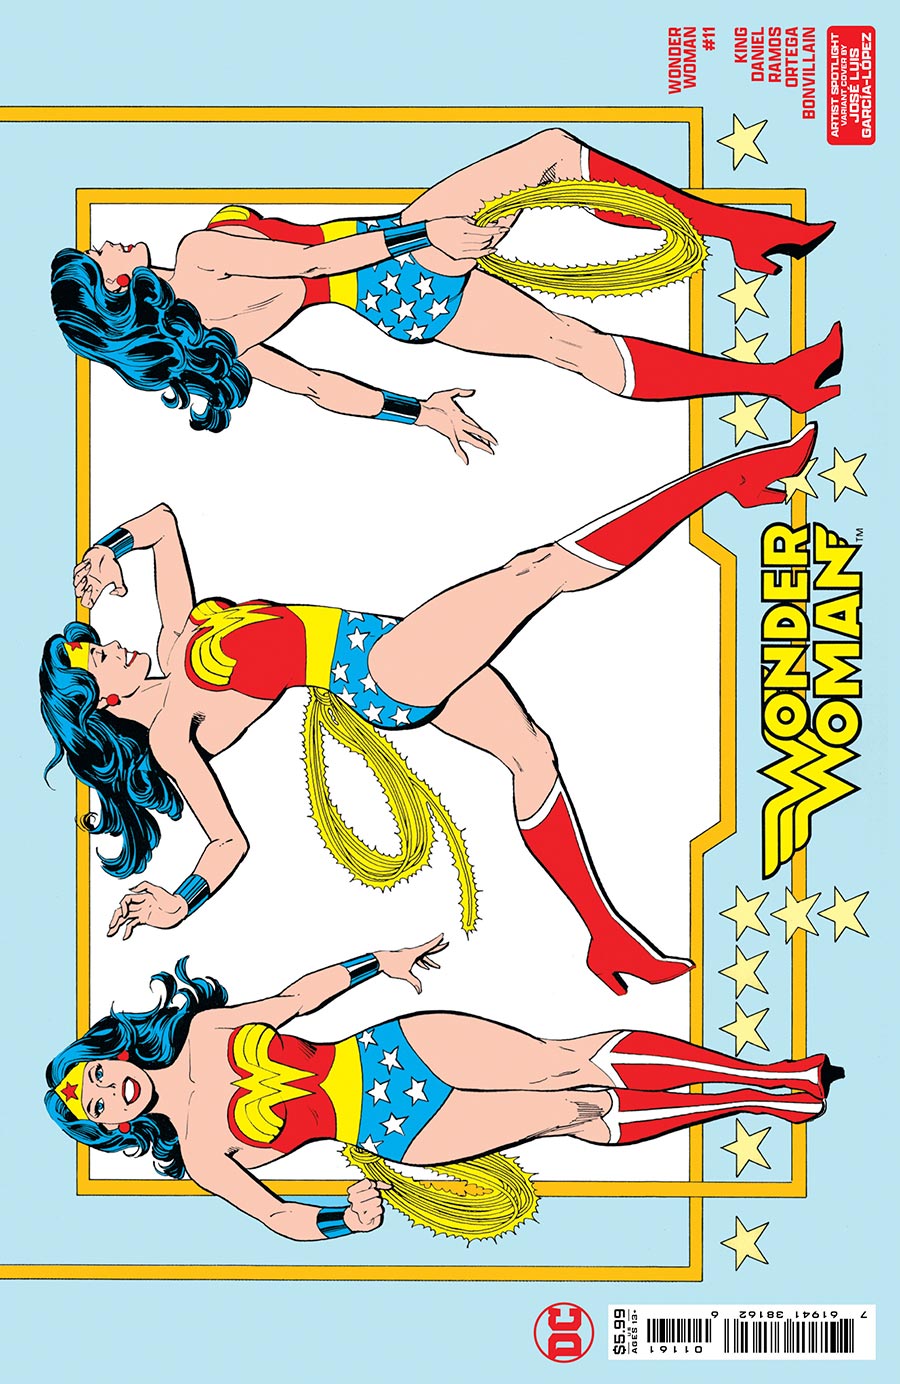 Wonder Woman Vol 6 #11 Cover D Variant Jose Luis Garcia-Lopez Artist Spotlight Card Stock Cover (Absolute Power Tie-In)